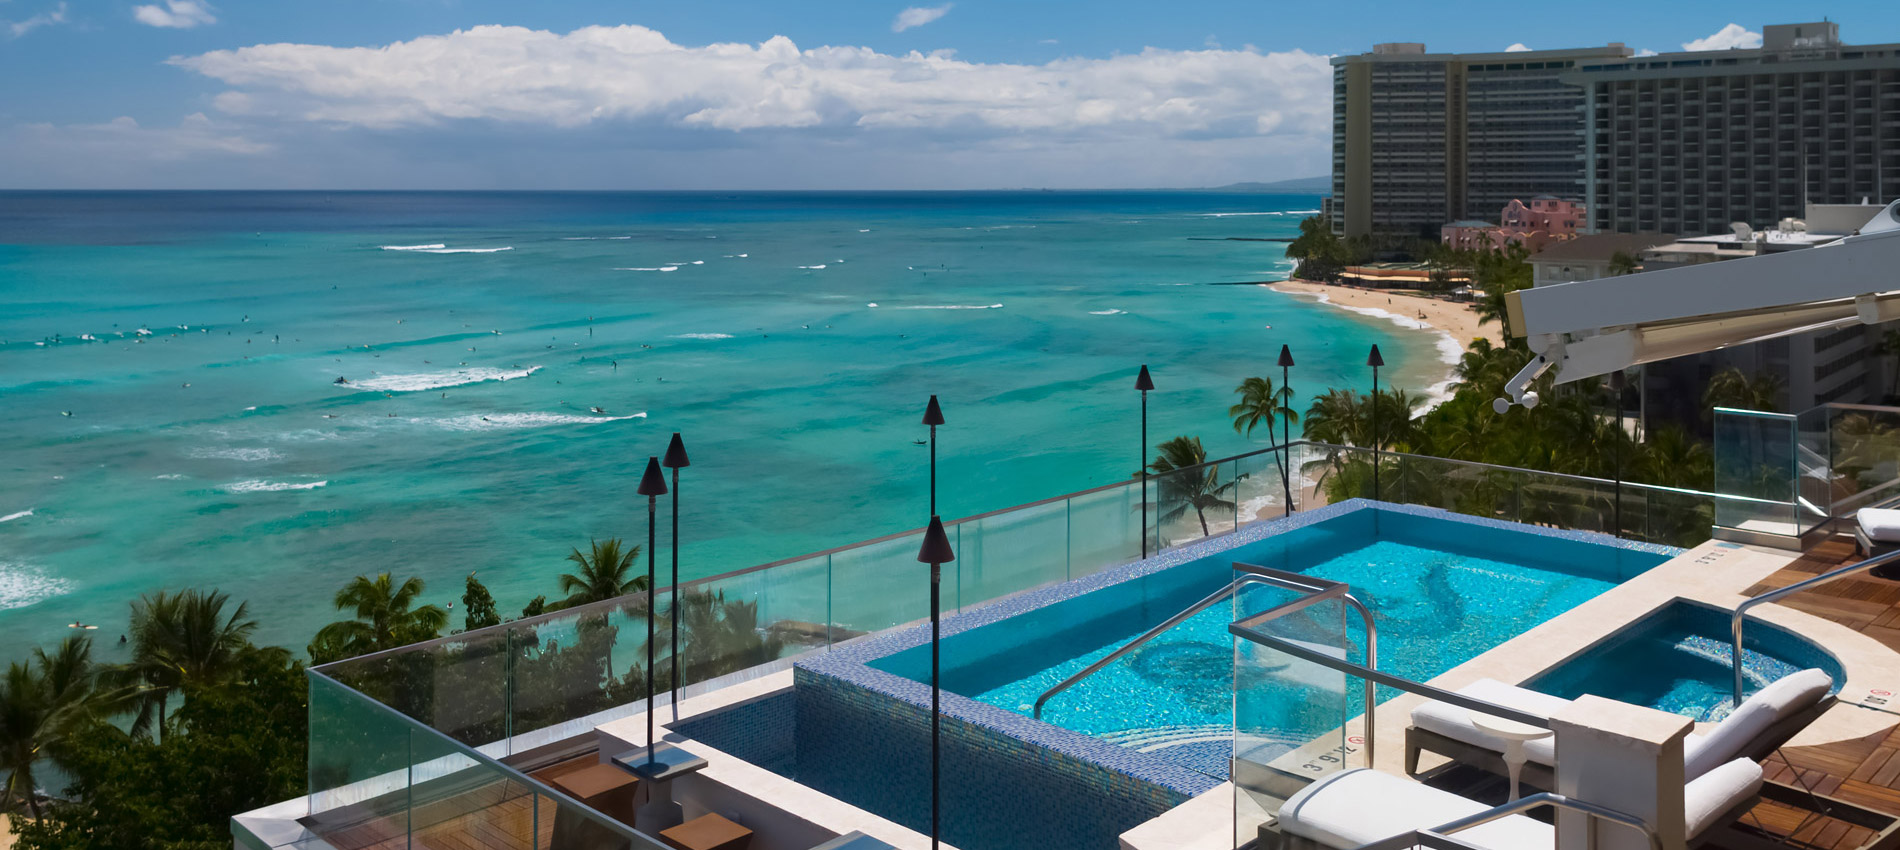 Infinity pool on the rooftop of ESPACIO, overlooking Waikiki Beach.